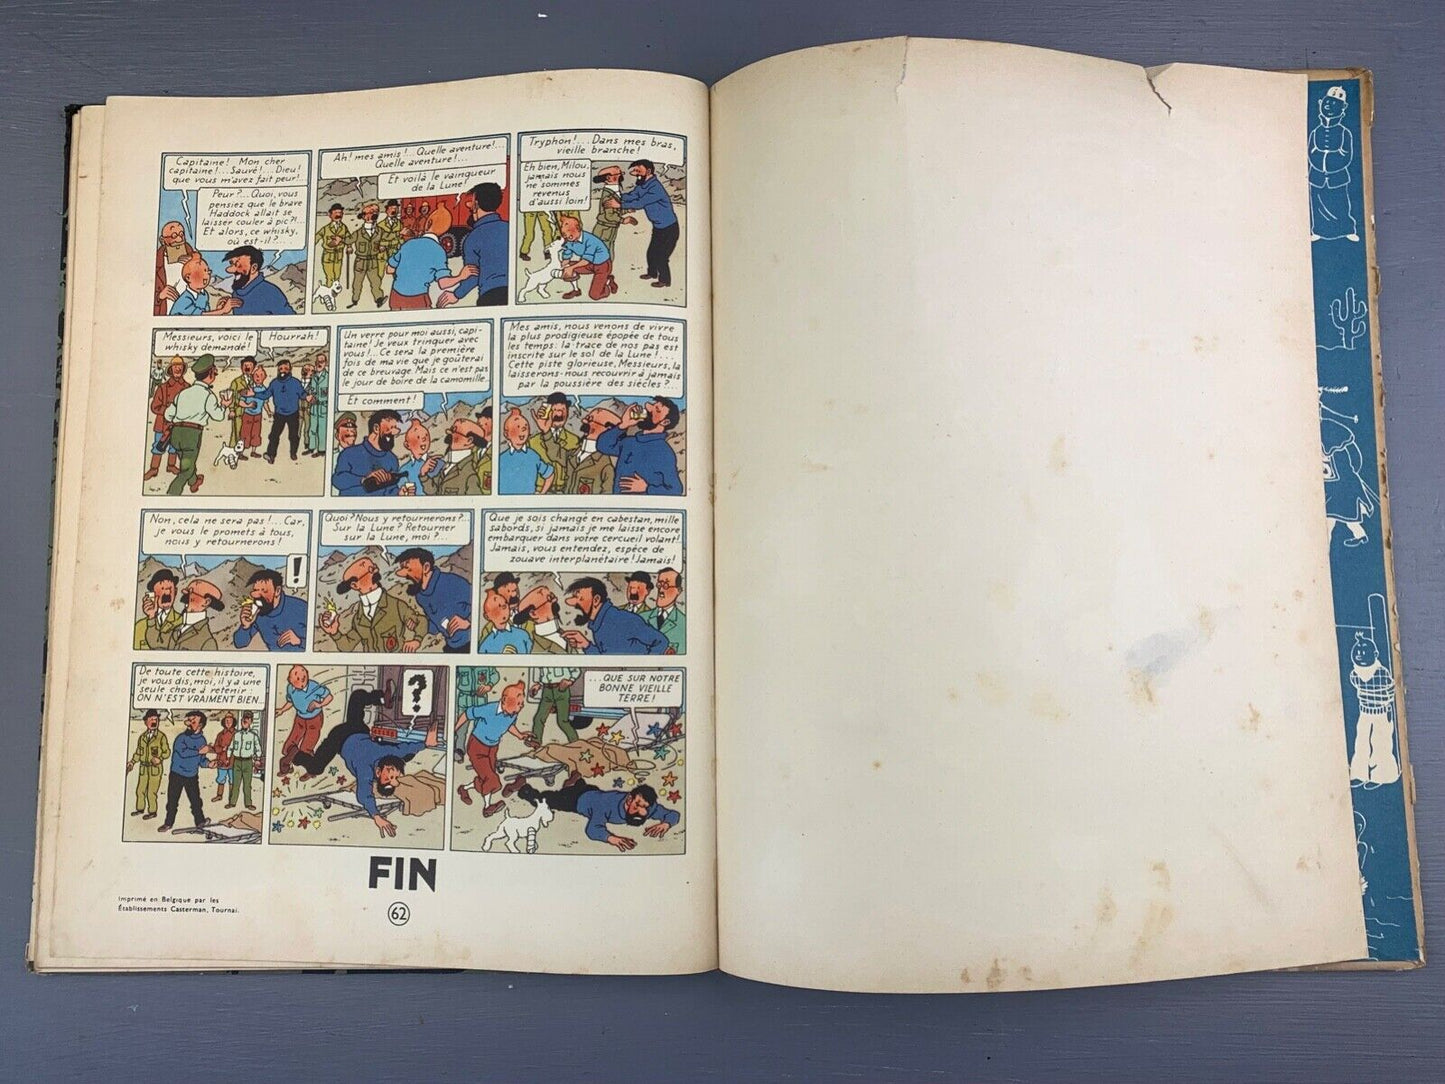 Marche Sur La Lune: Casterman 1954 1st French Edition HB Tintin book Herge EO